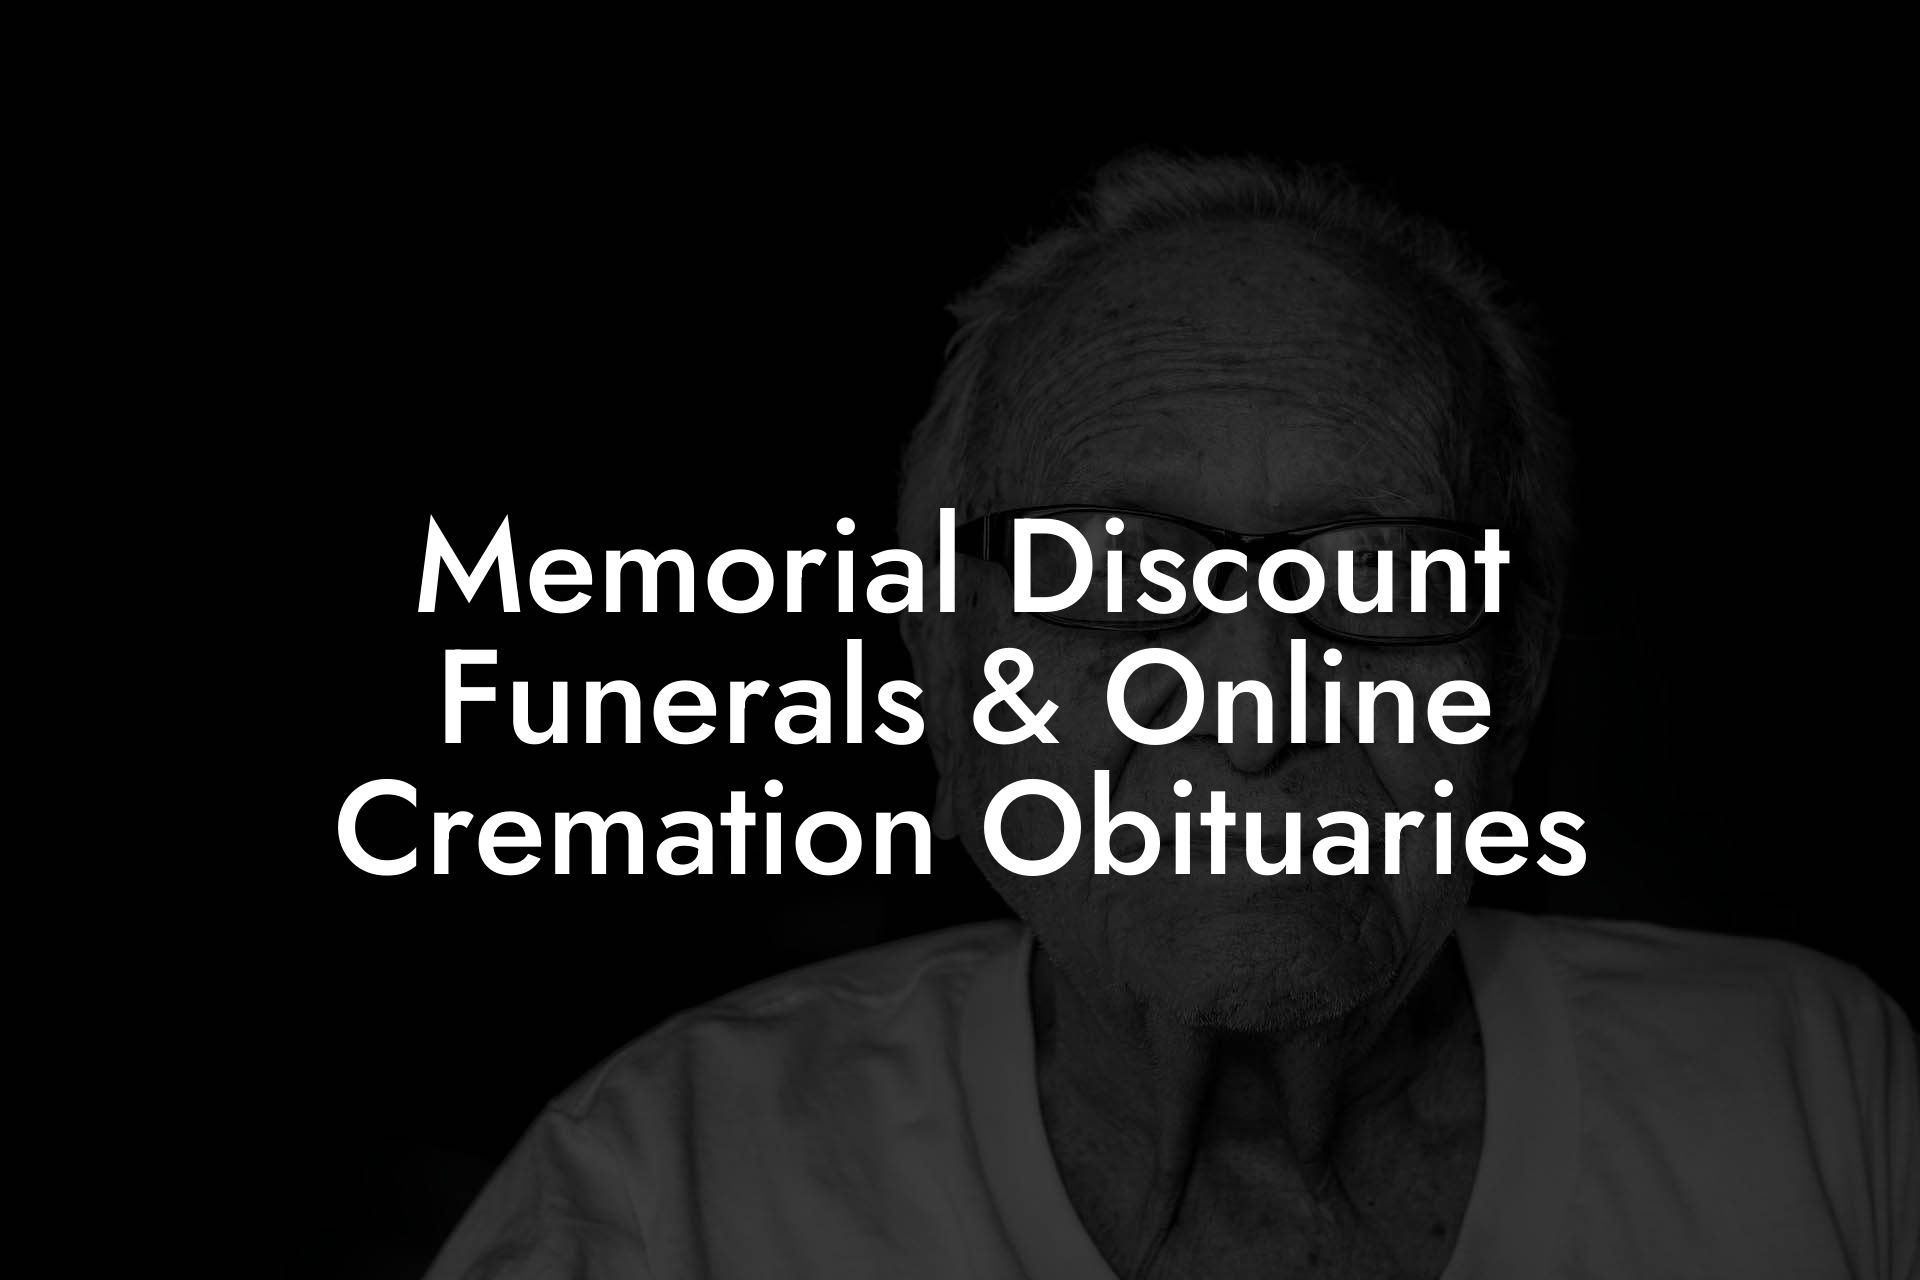 Memorial Discount Funerals & Online Cremation Obituaries